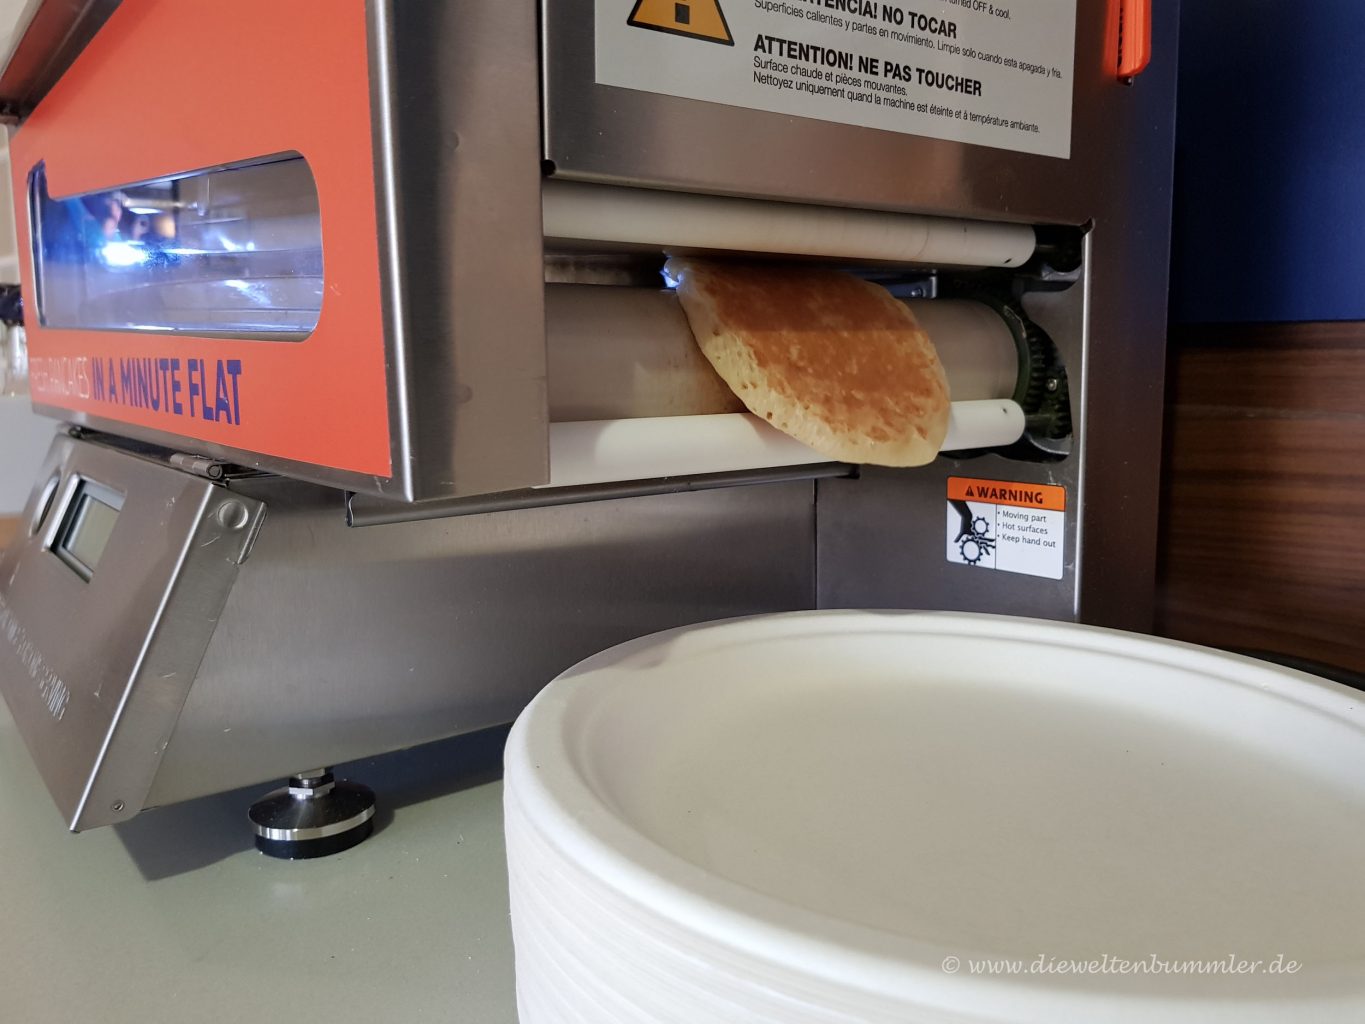 Pancake aus dem Automaten